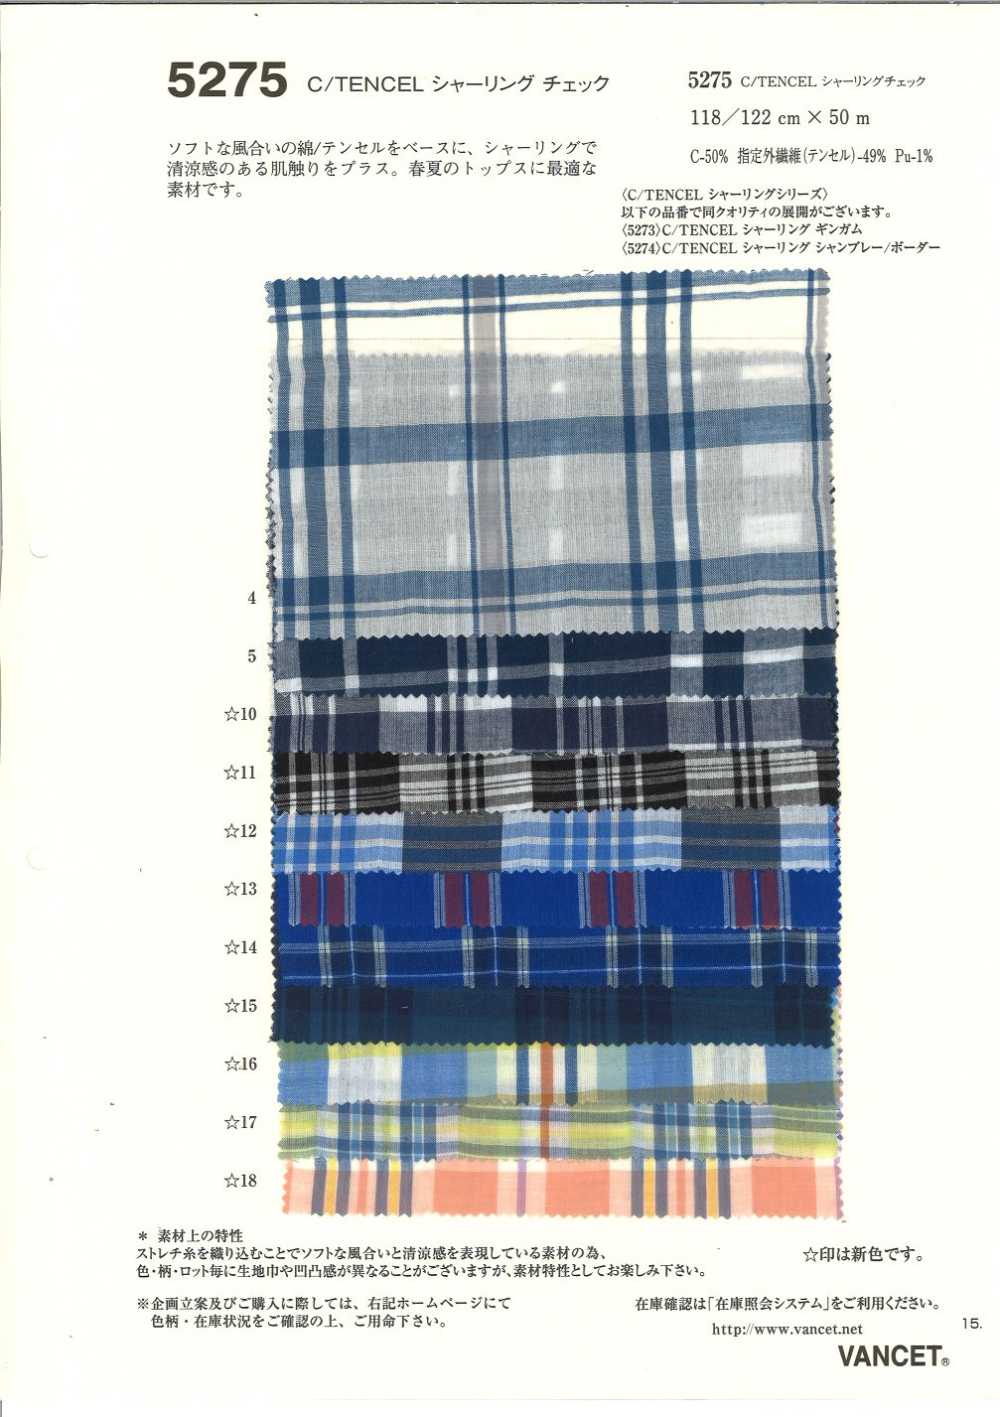 5275 C / TENCEL Shirring Check[Textile / Fabric] VANCET